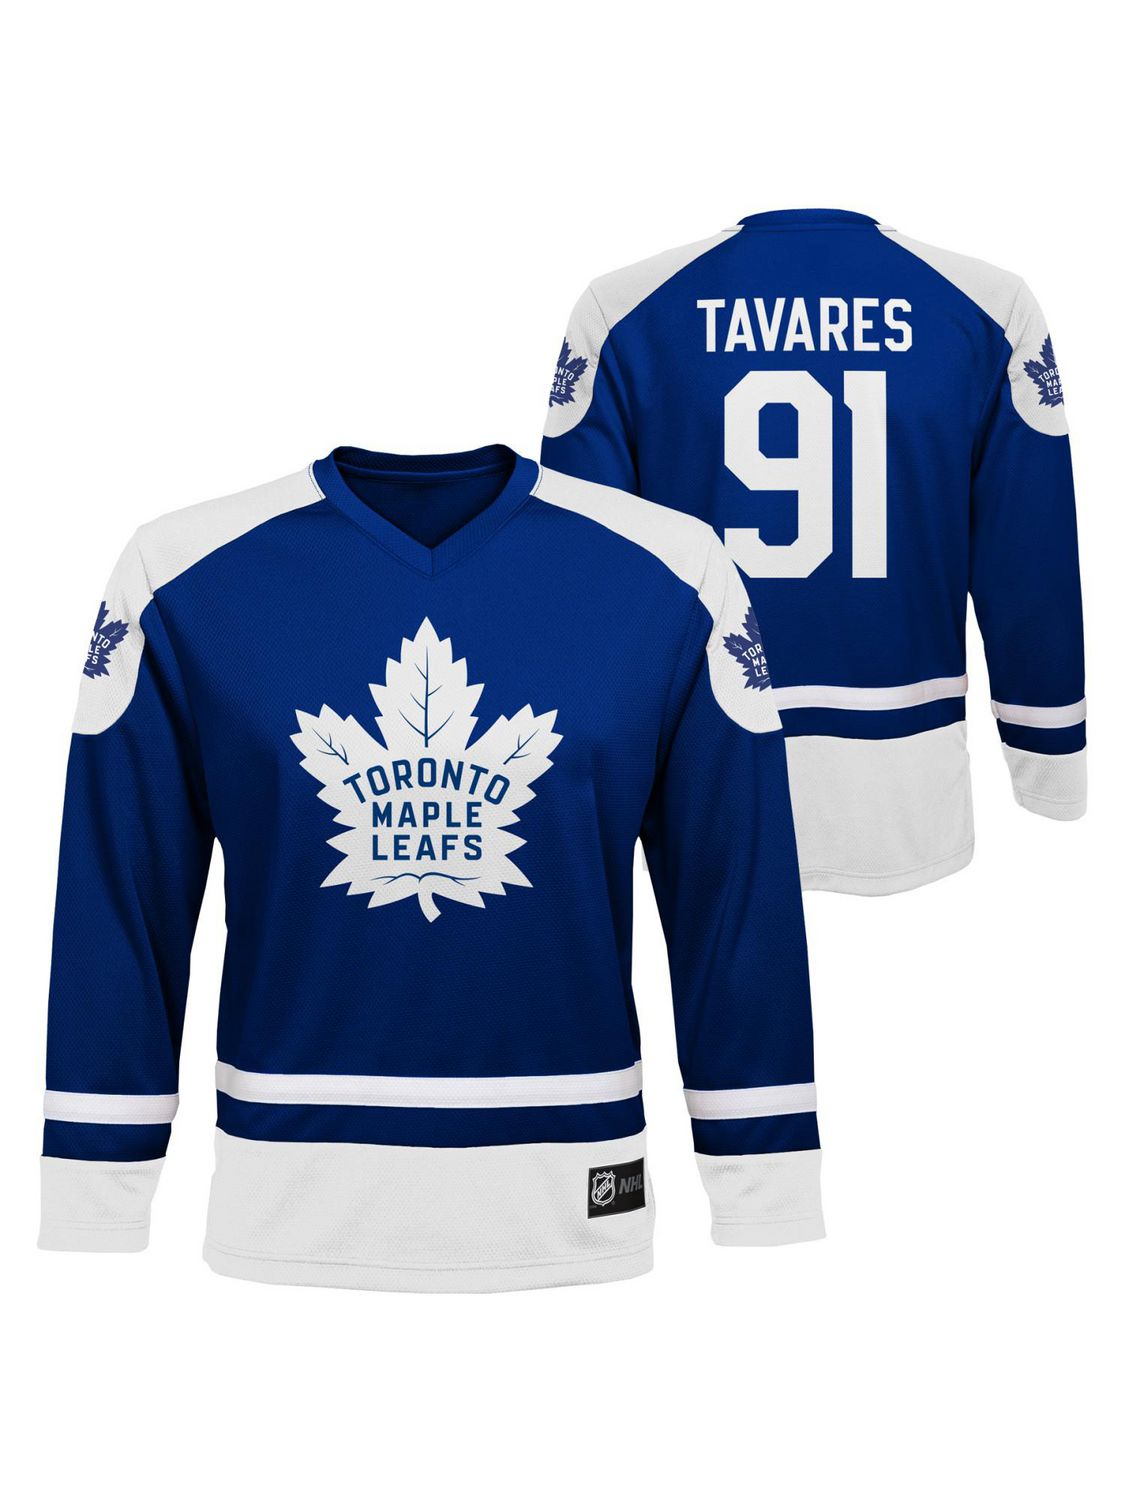 Toronto Maple Leafs Fanatics Men's John Tavares Replica Jersey